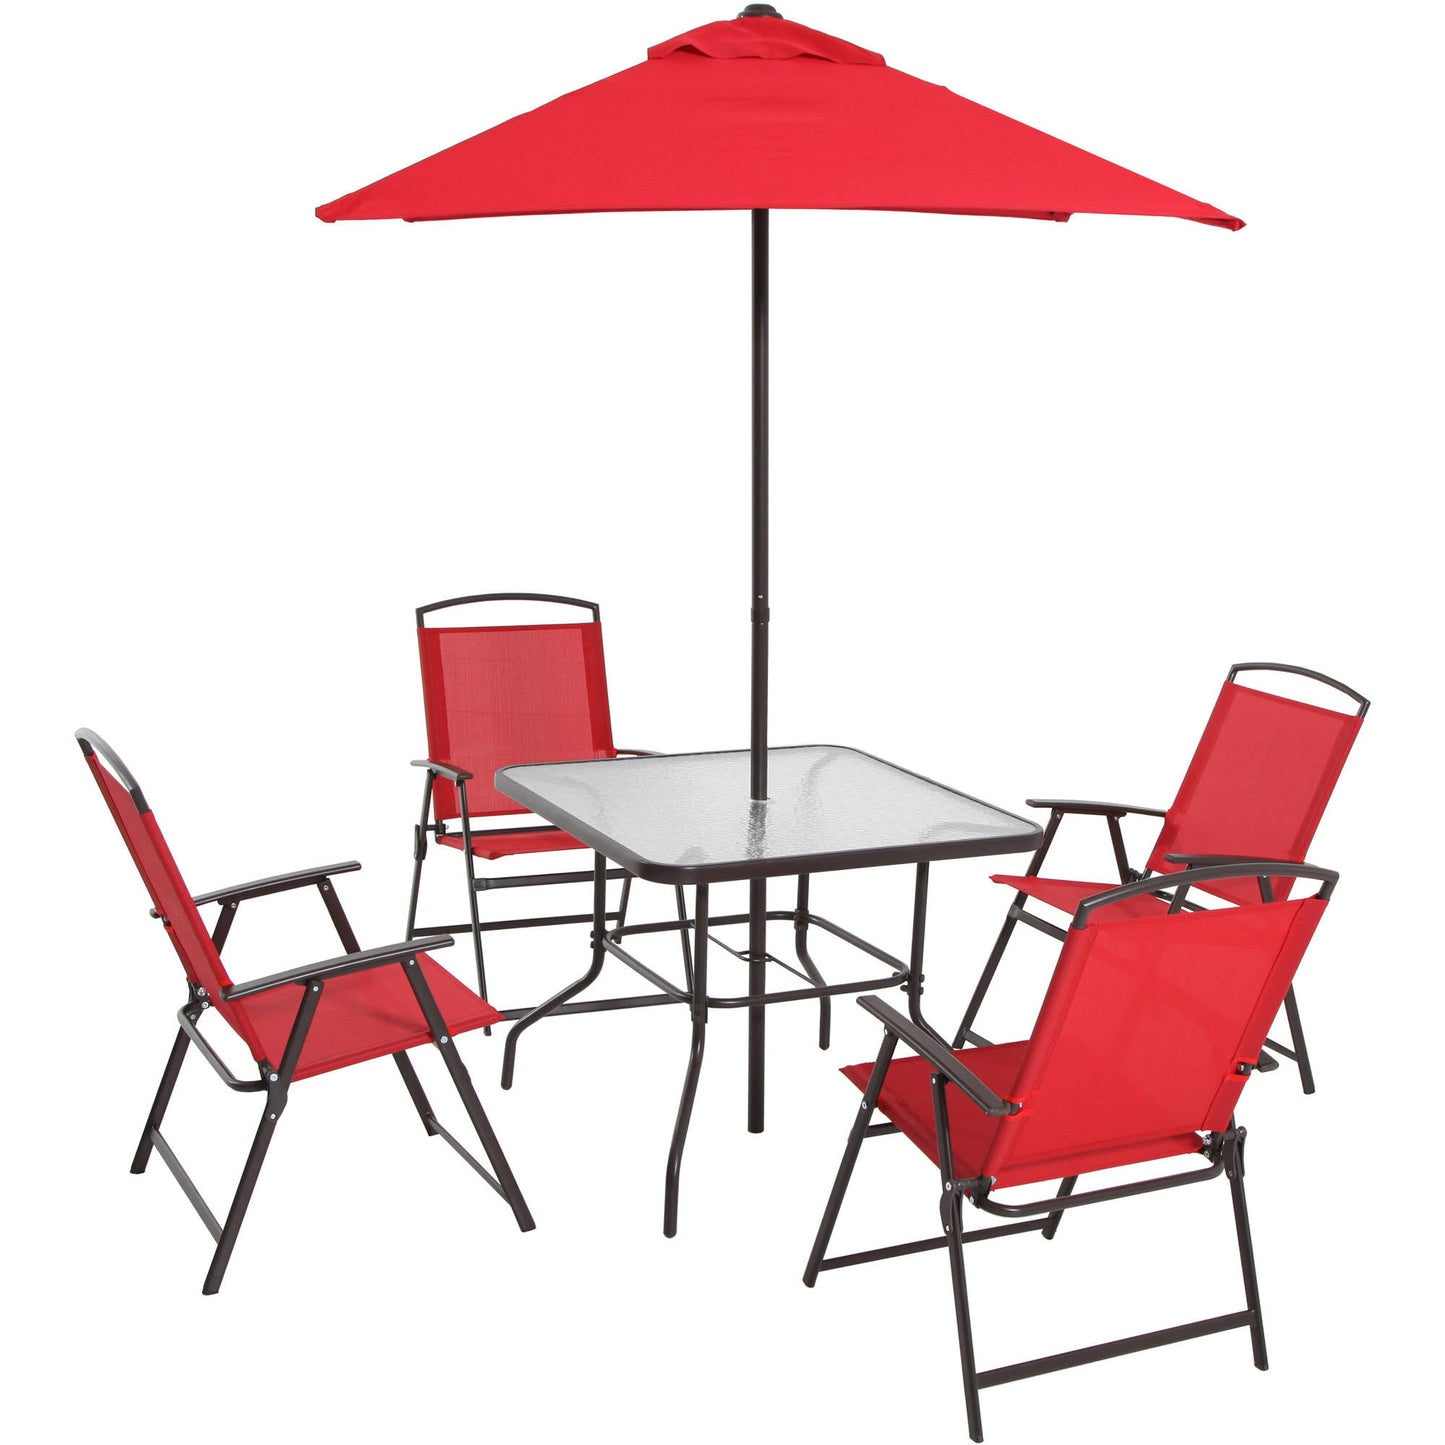 Albany Lane 6-Piece Outdoor Patio Dining Set, Black canopy tent  patio furniture  umbrella base